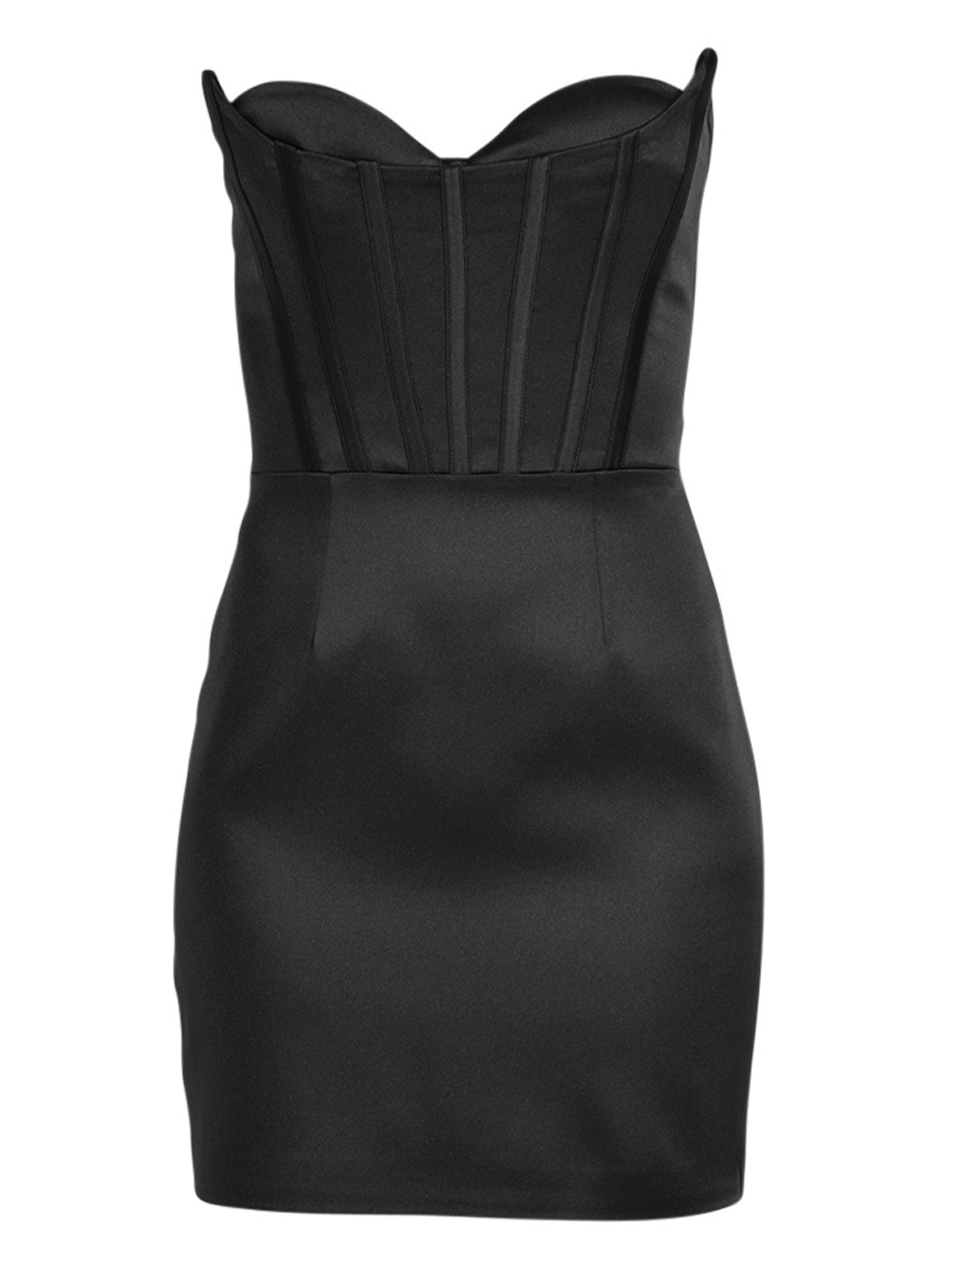 GIGII'S Kyrenia Corset Dress in Black Product Shot 

